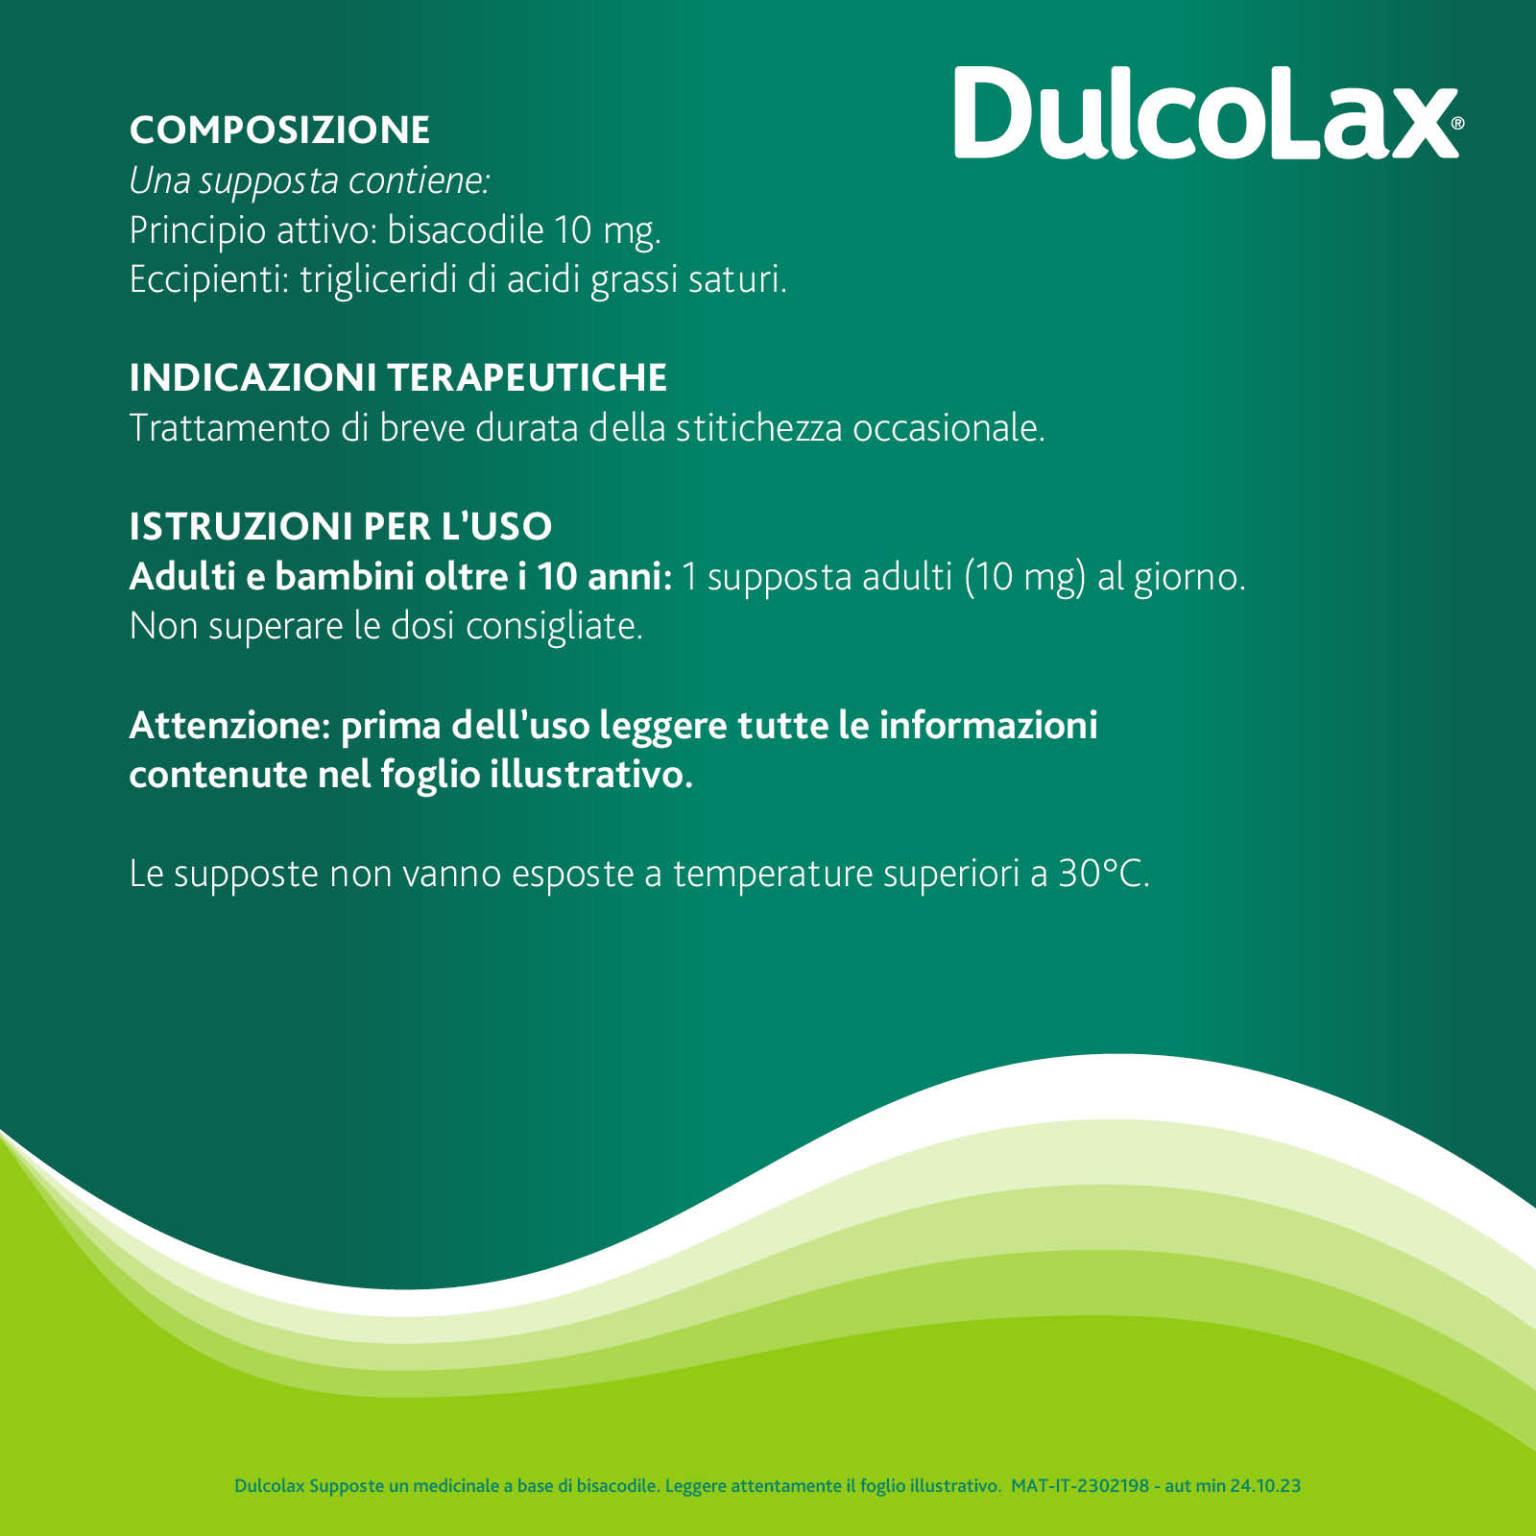 008997025 - DULCOLAX*AD 6 supp 10 mg - 2114106_4.jpg